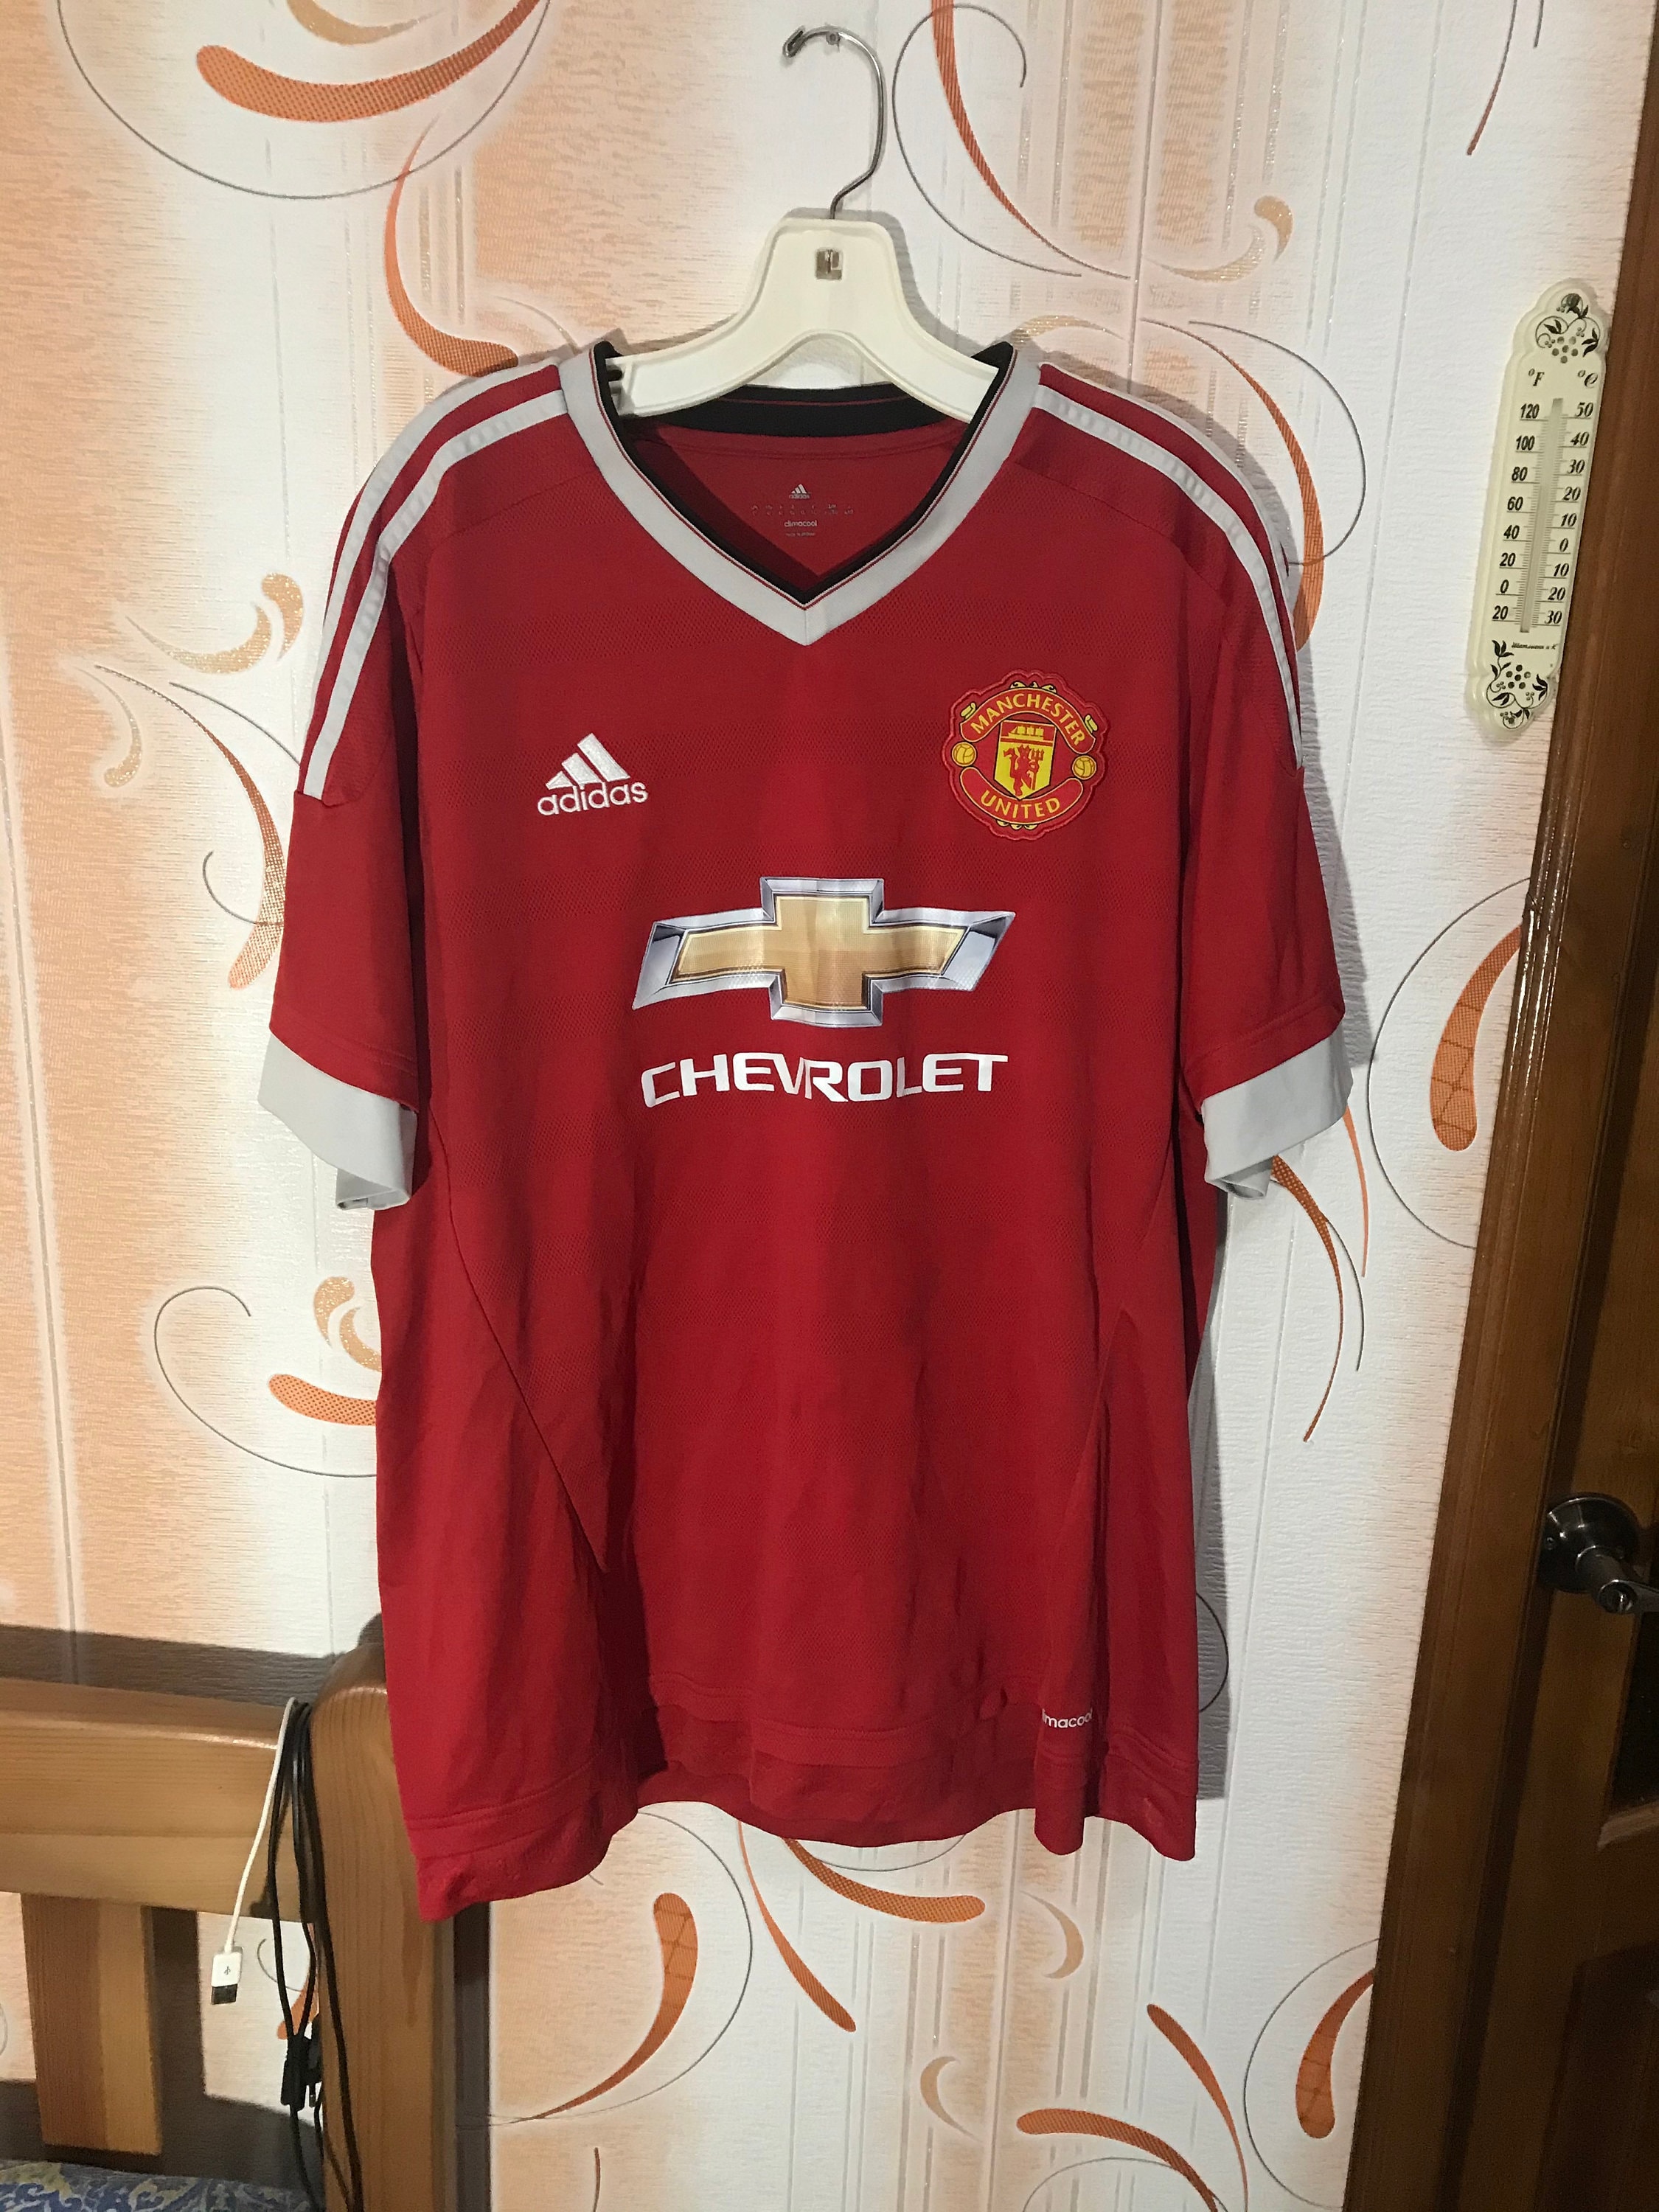 Manchester United 2015-16 Home Kit